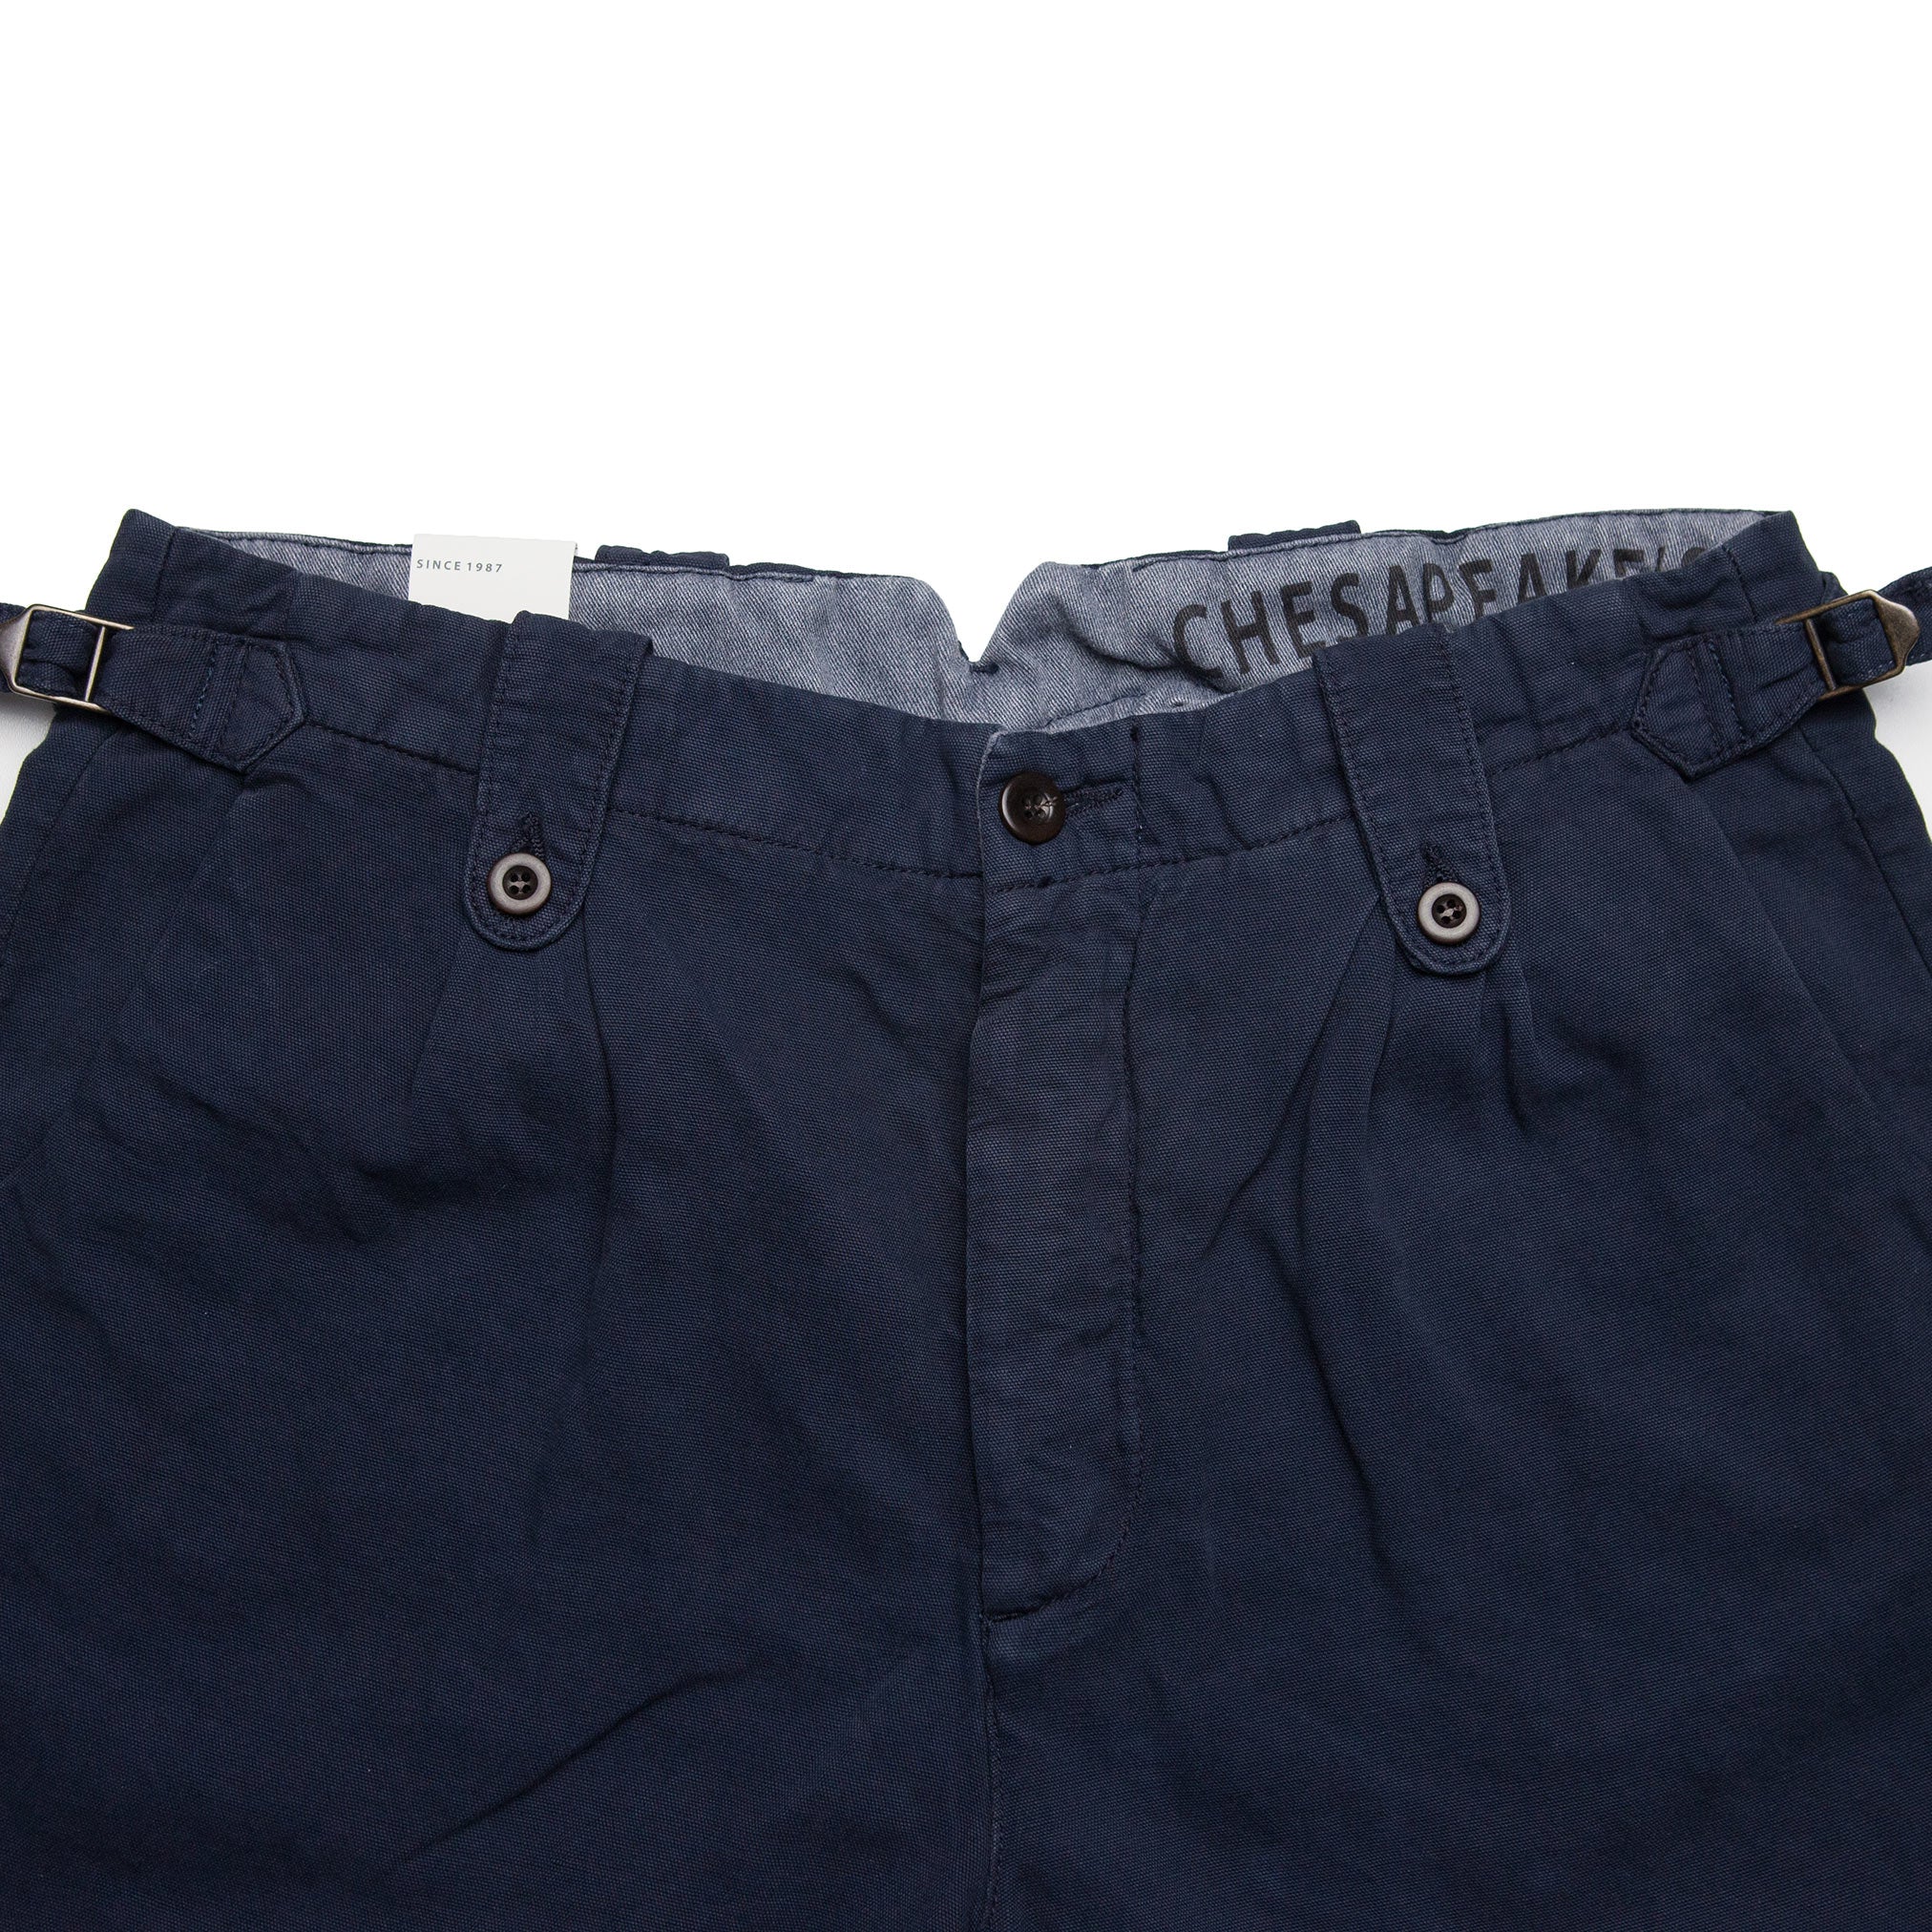 Navarre Cotton & Linen Shorts in Navy